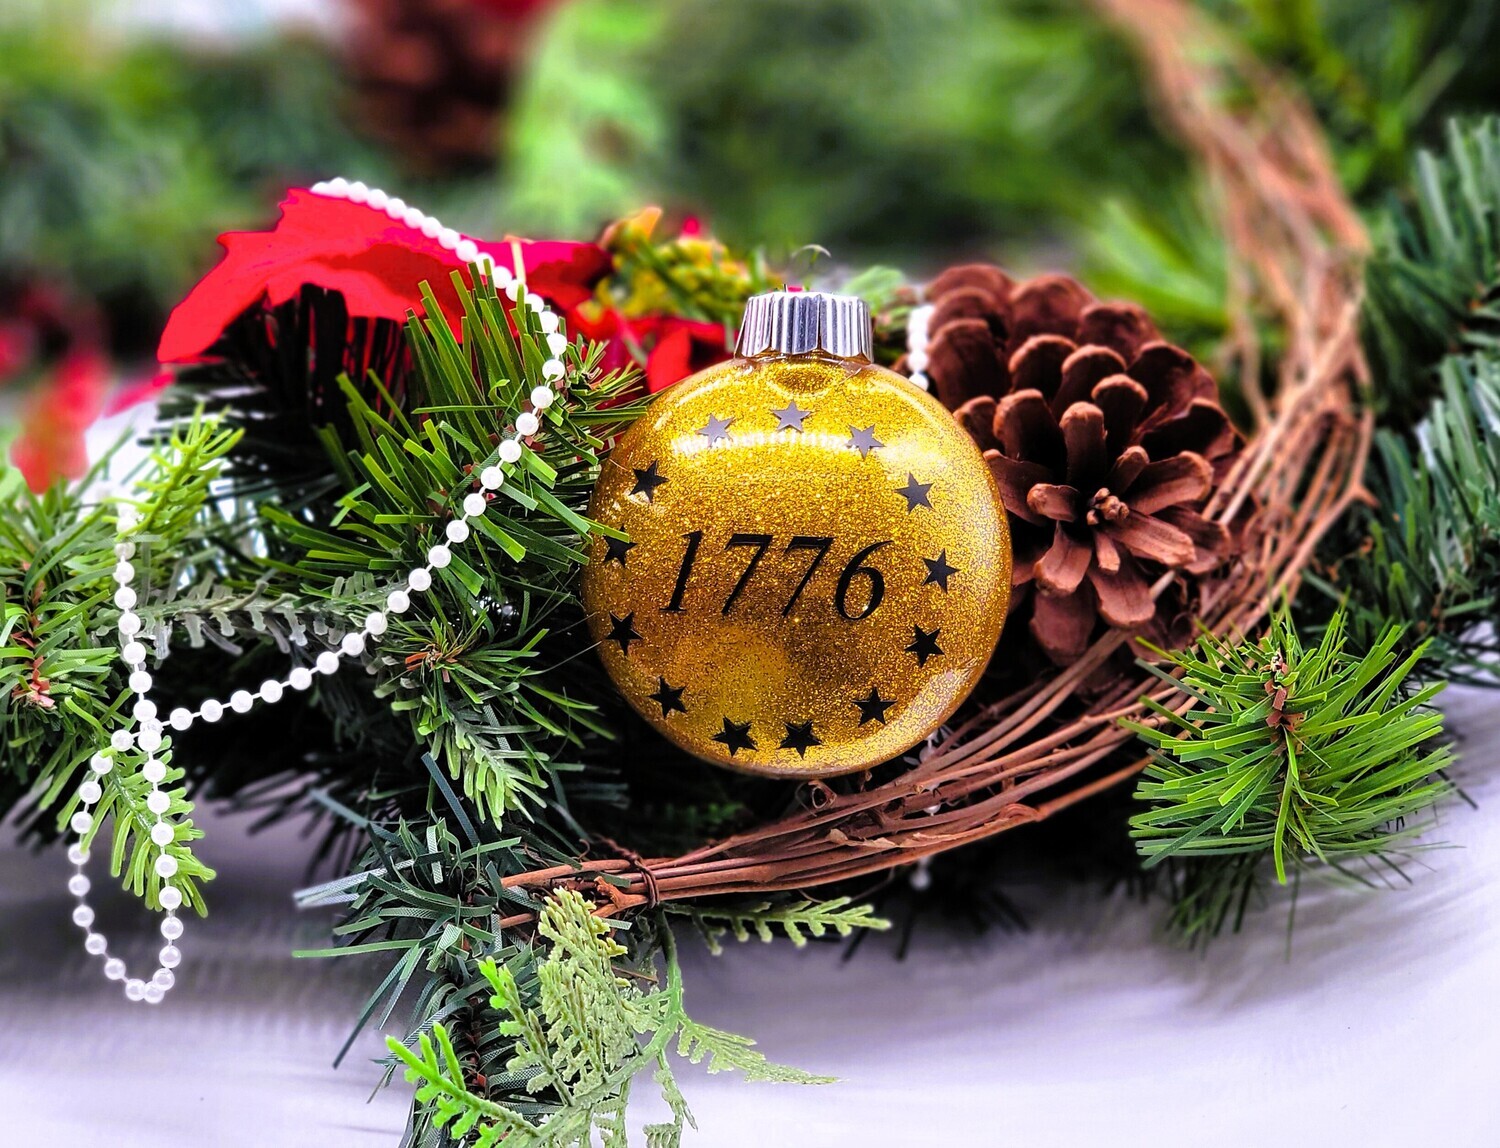 1776 Glitter Ornament